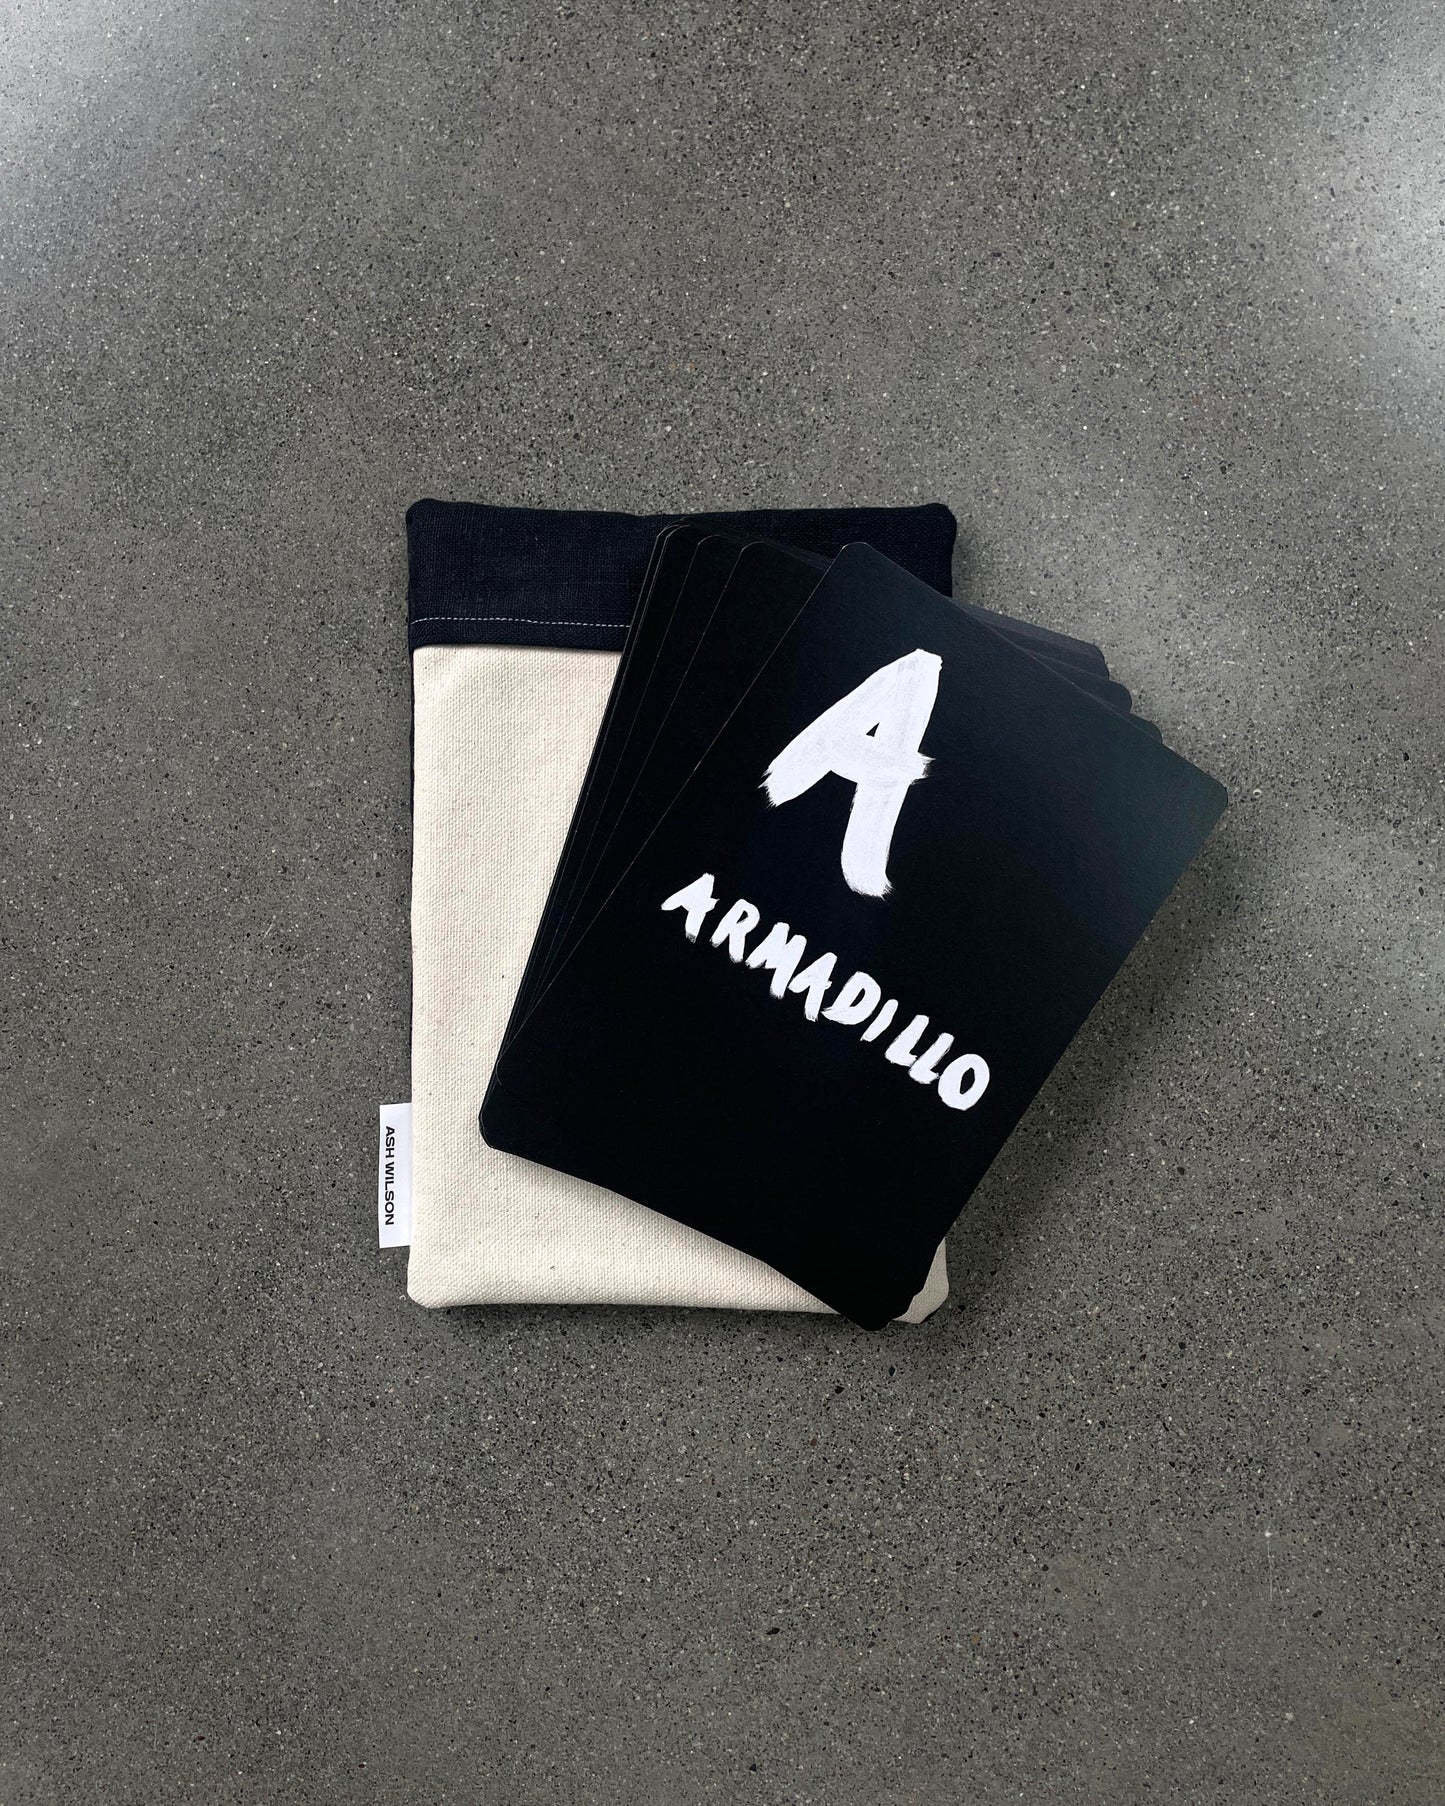 A-Z Animal Alphabet Flashcard Set